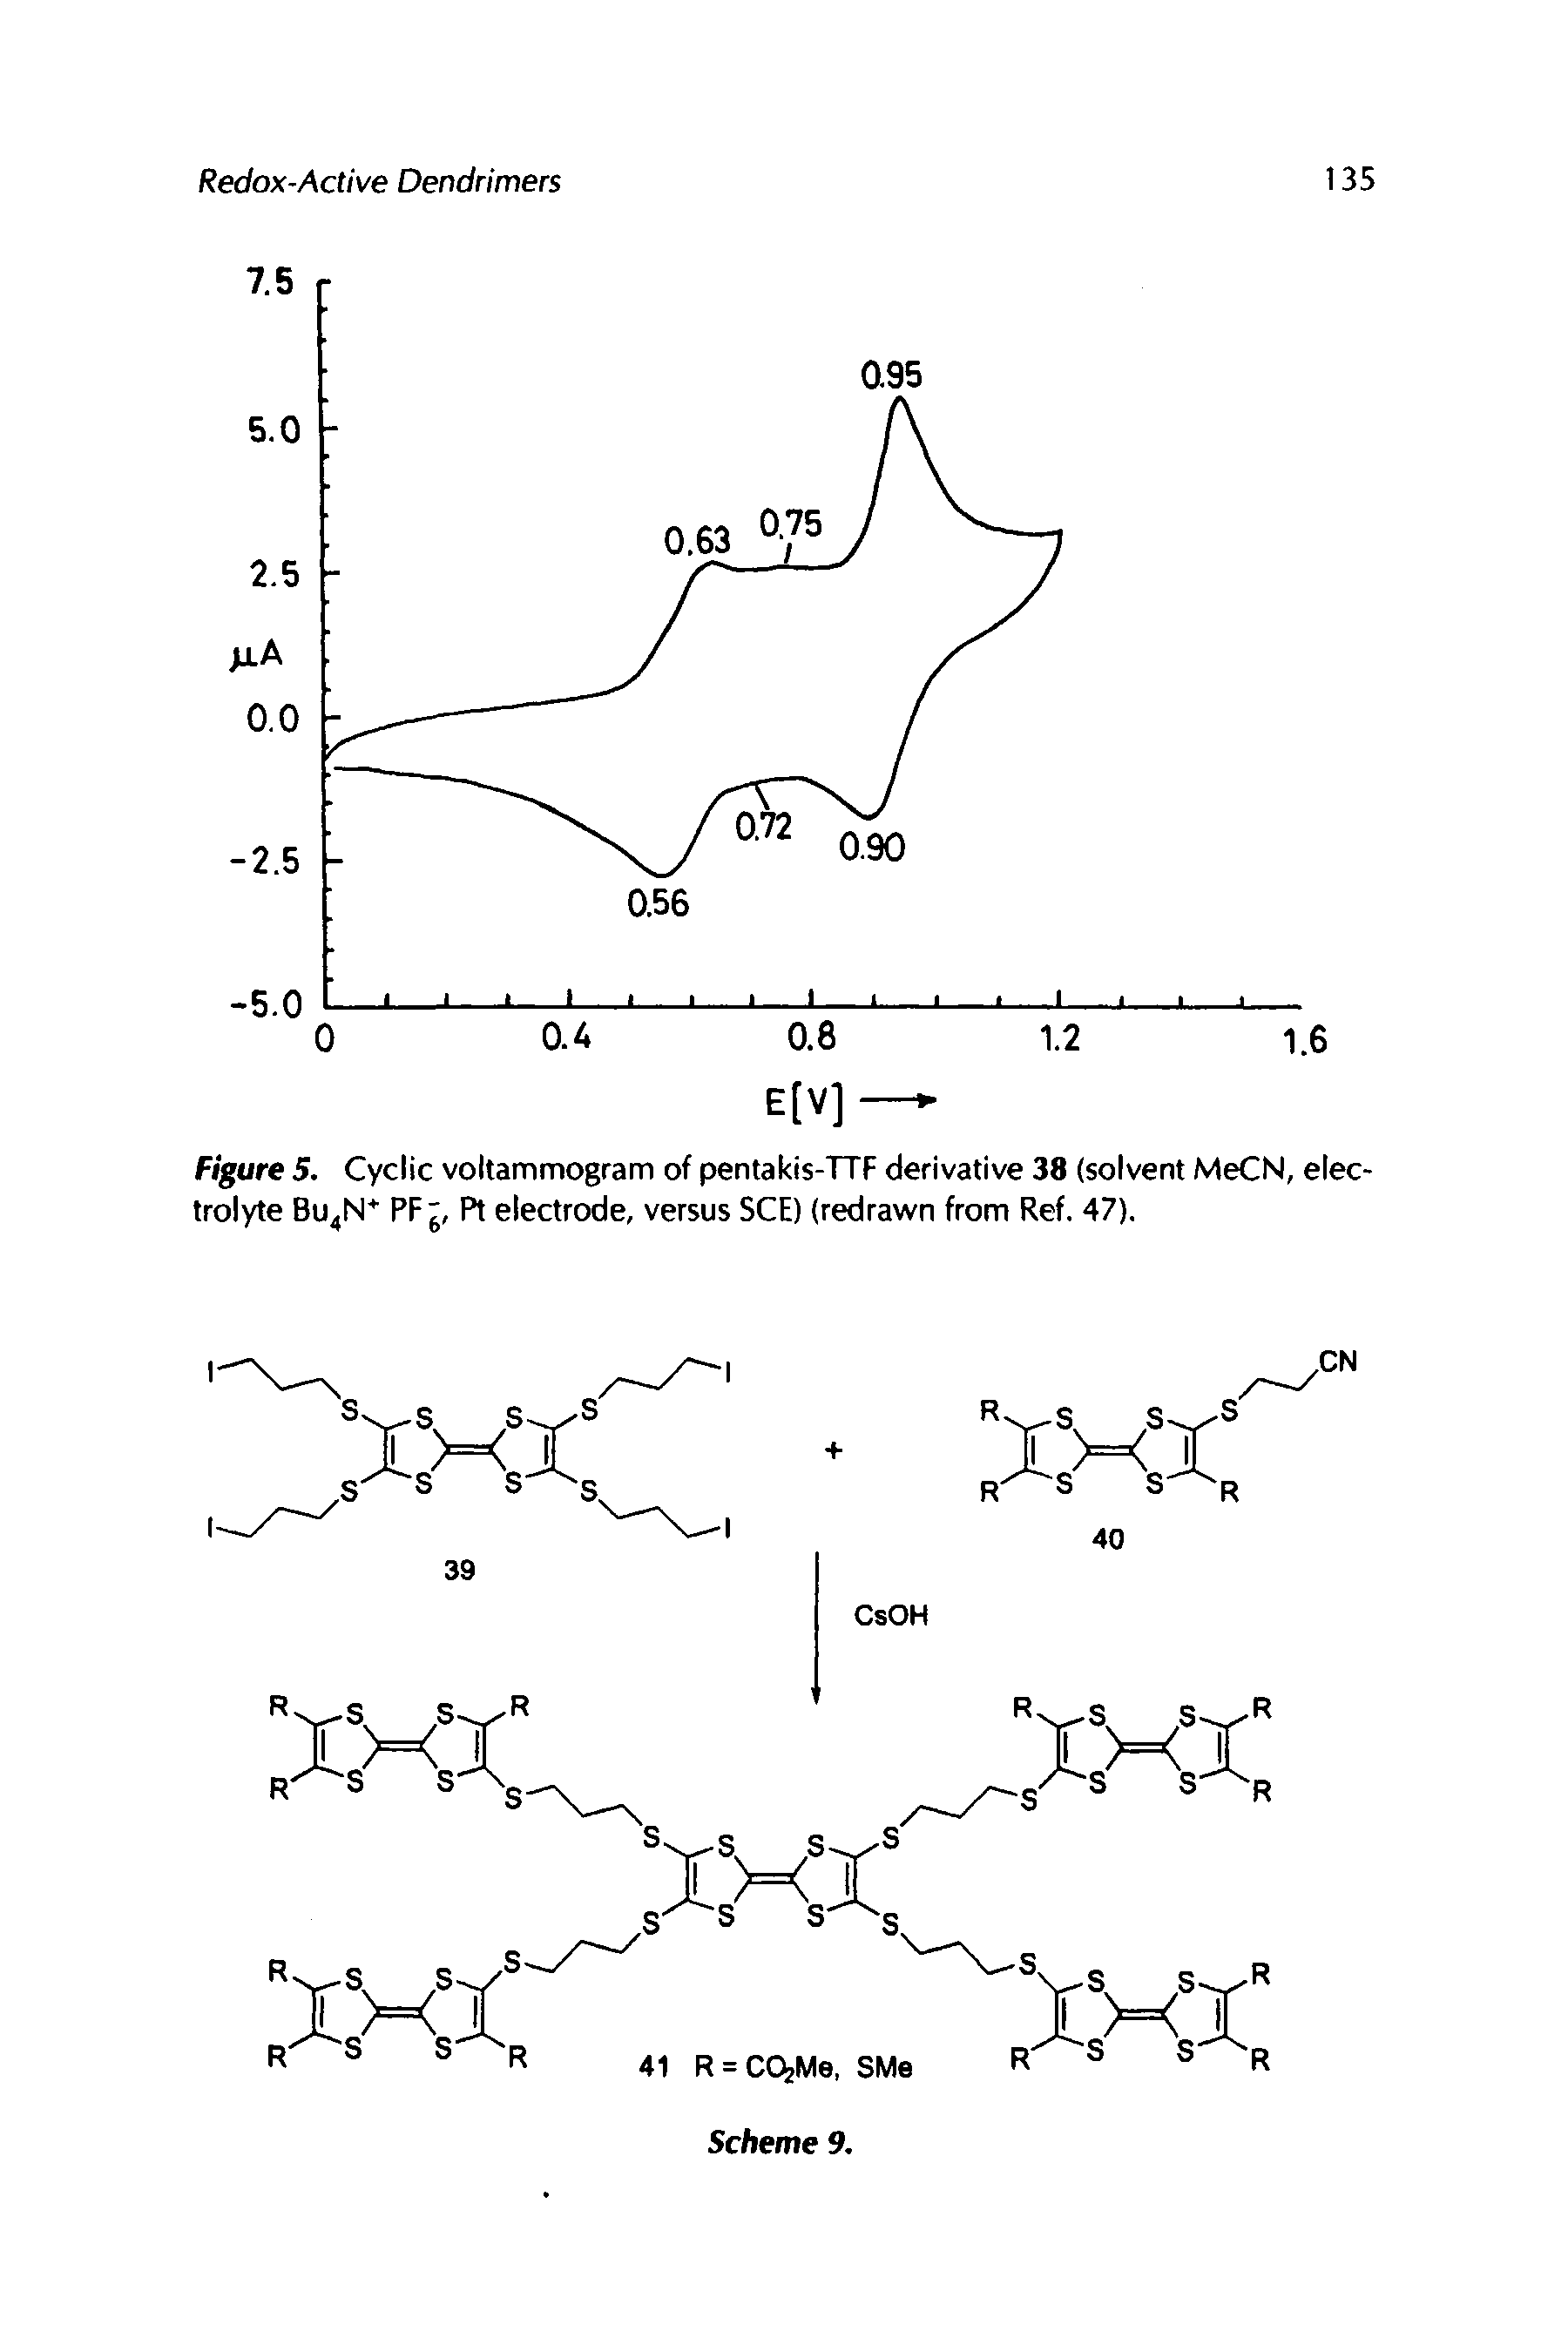 Figure 5. Cyclic voltammogram of pentakis-TTF derivative 38 (solvent MeCN, electrolyte Bu N PF, Pt electrode, versus SCE) (redrawn from Ref. 47).